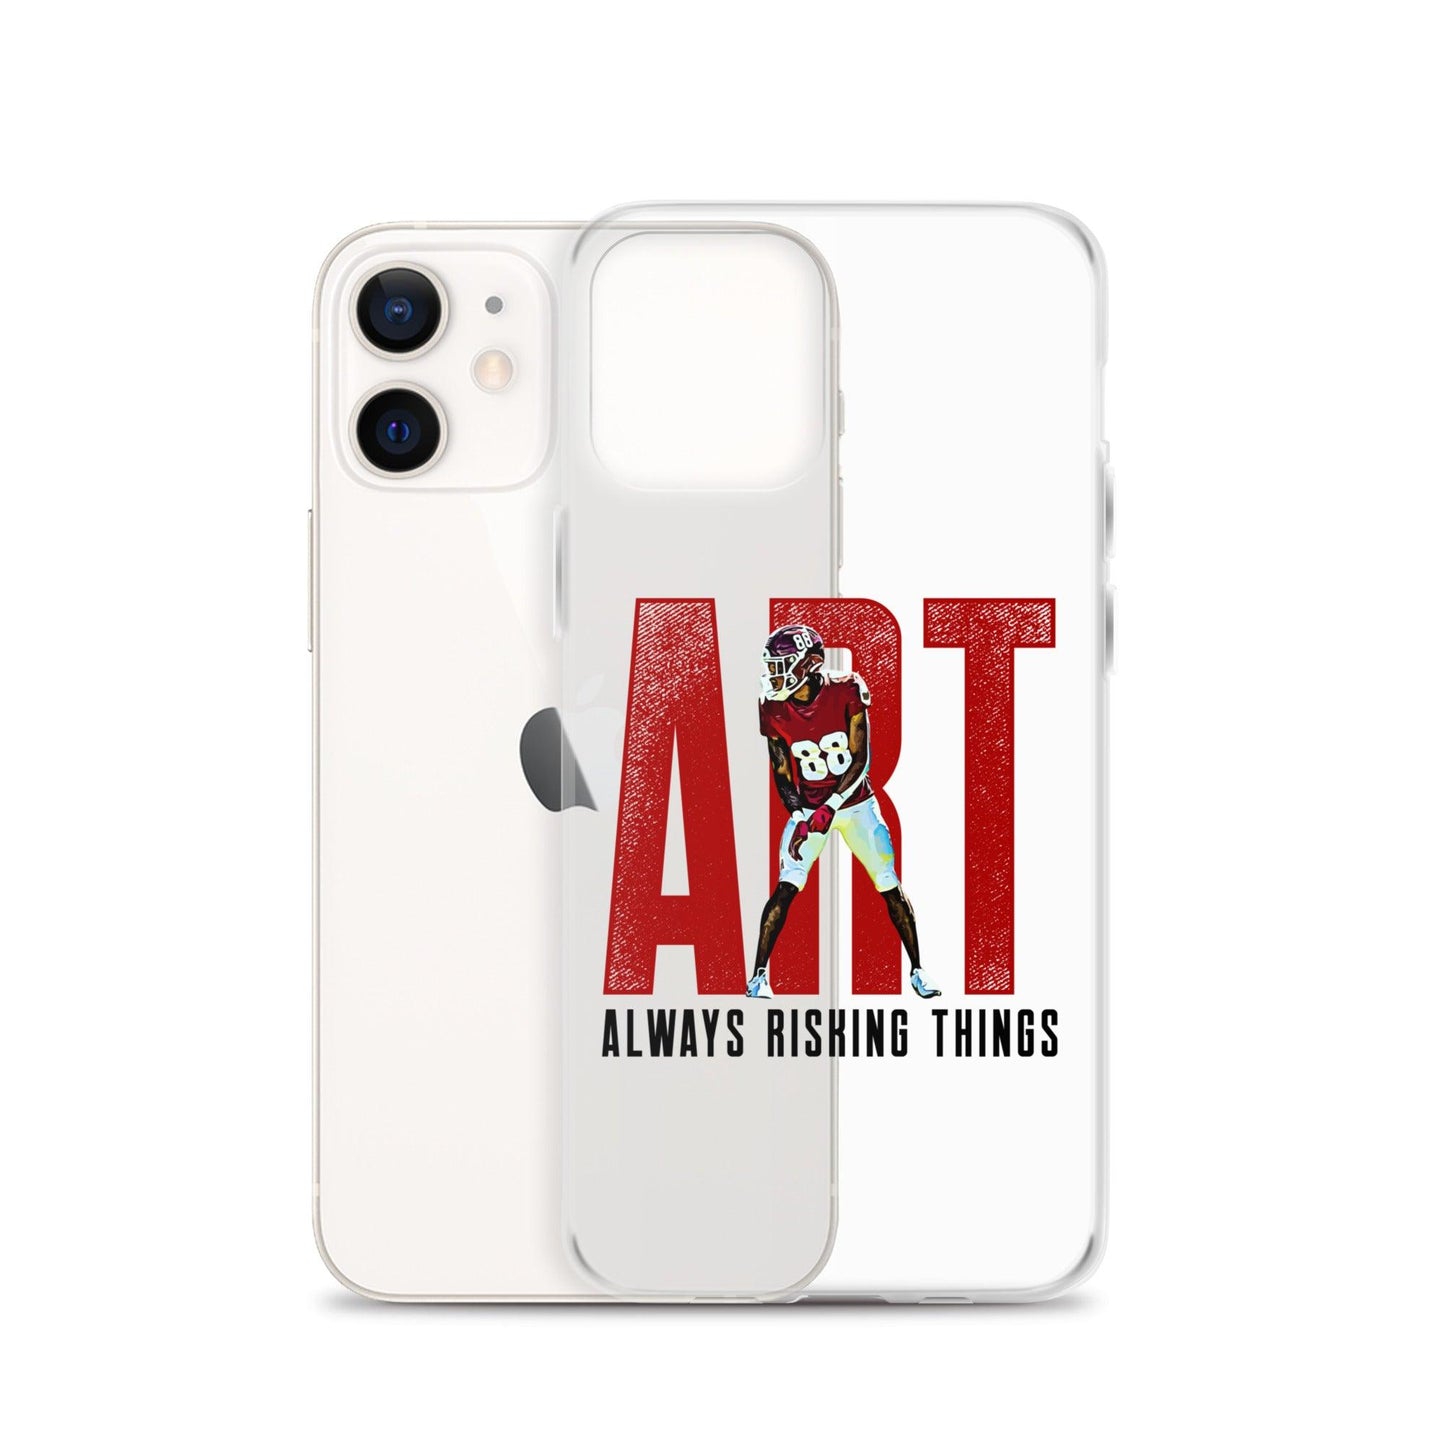 De'Von Fox "ART" iPhone Case - Fan Arch